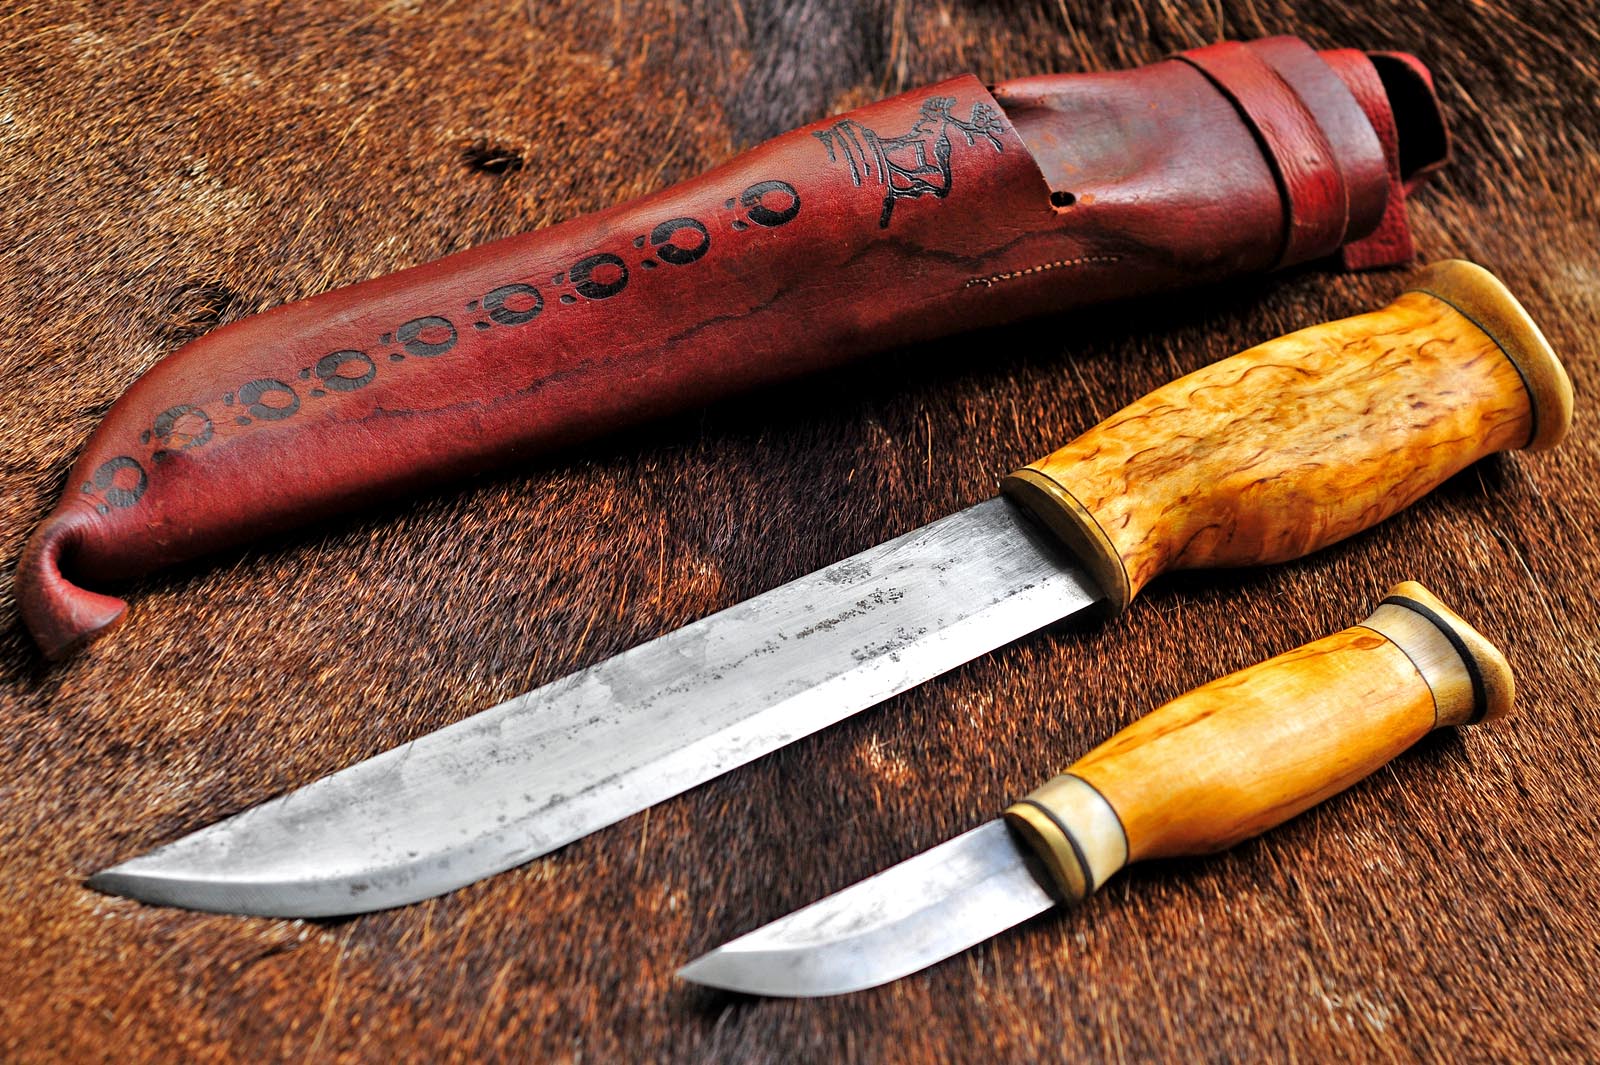 Sada nožov Wood Jewel Lapinleuku - 2 nože